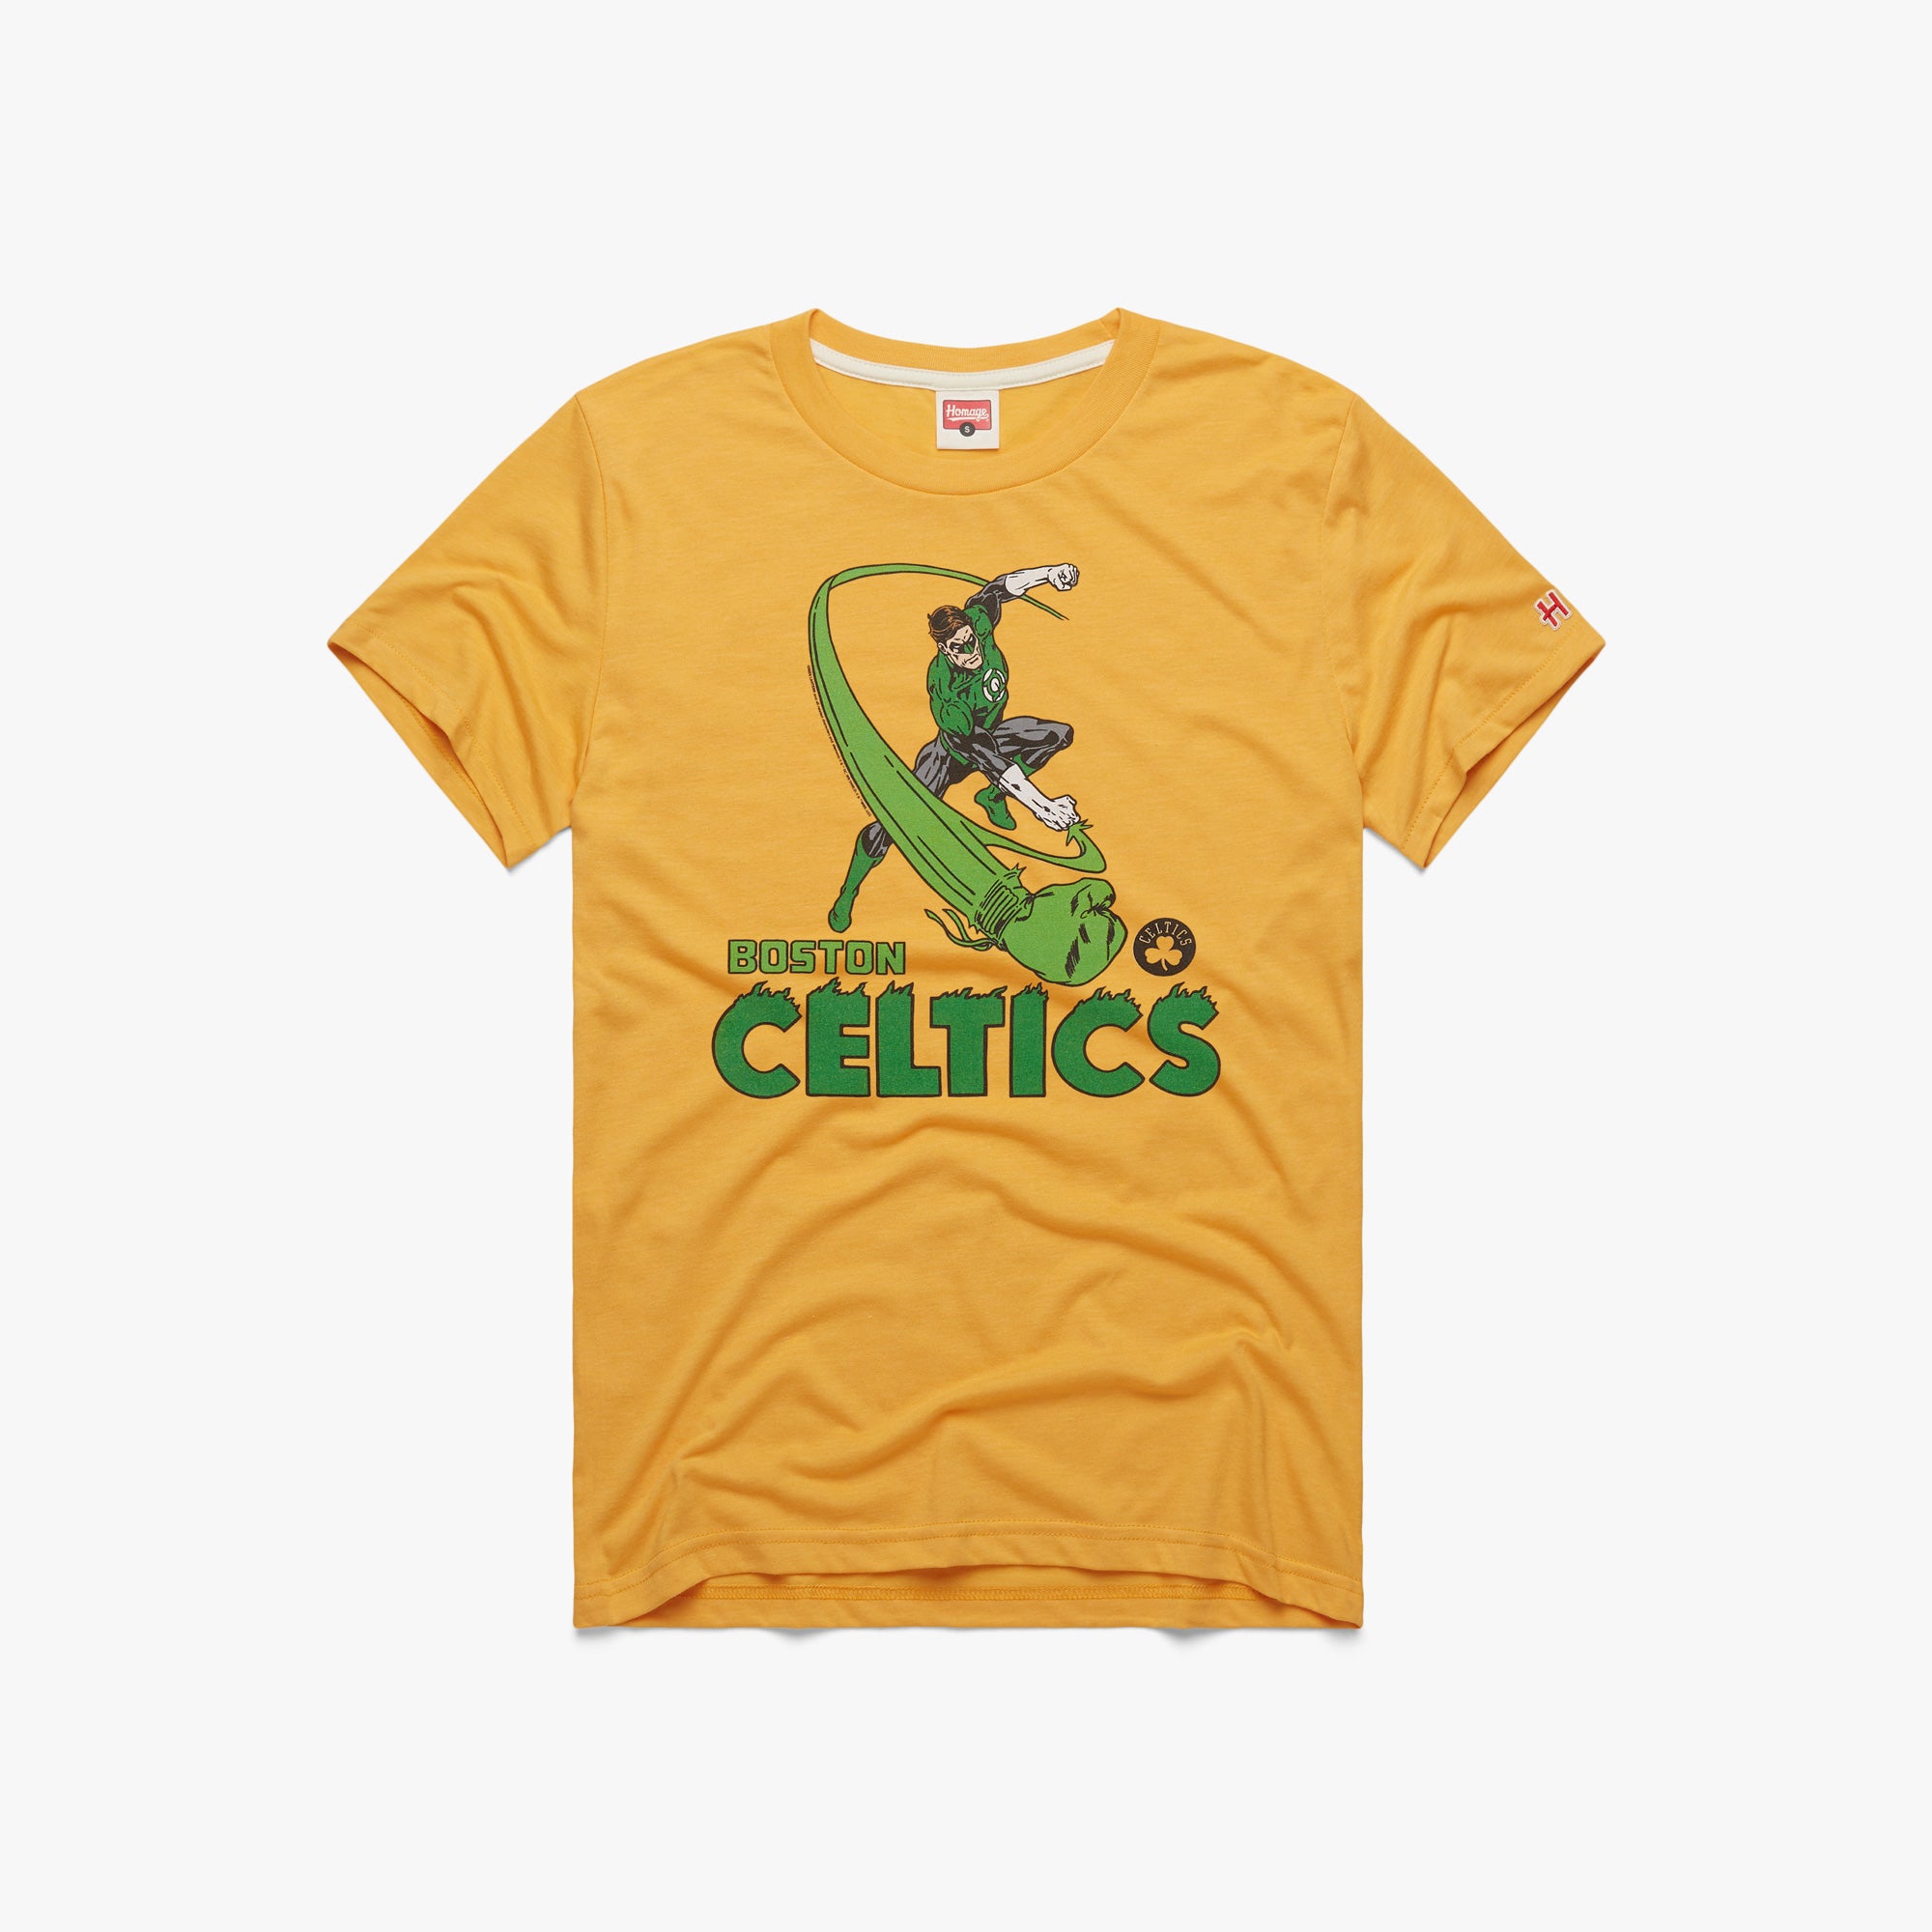 Boston Celtics x Green Lantern jersey concept designed by @srelix on  Instagram. Let me know what you guys think! : r/bostonceltics